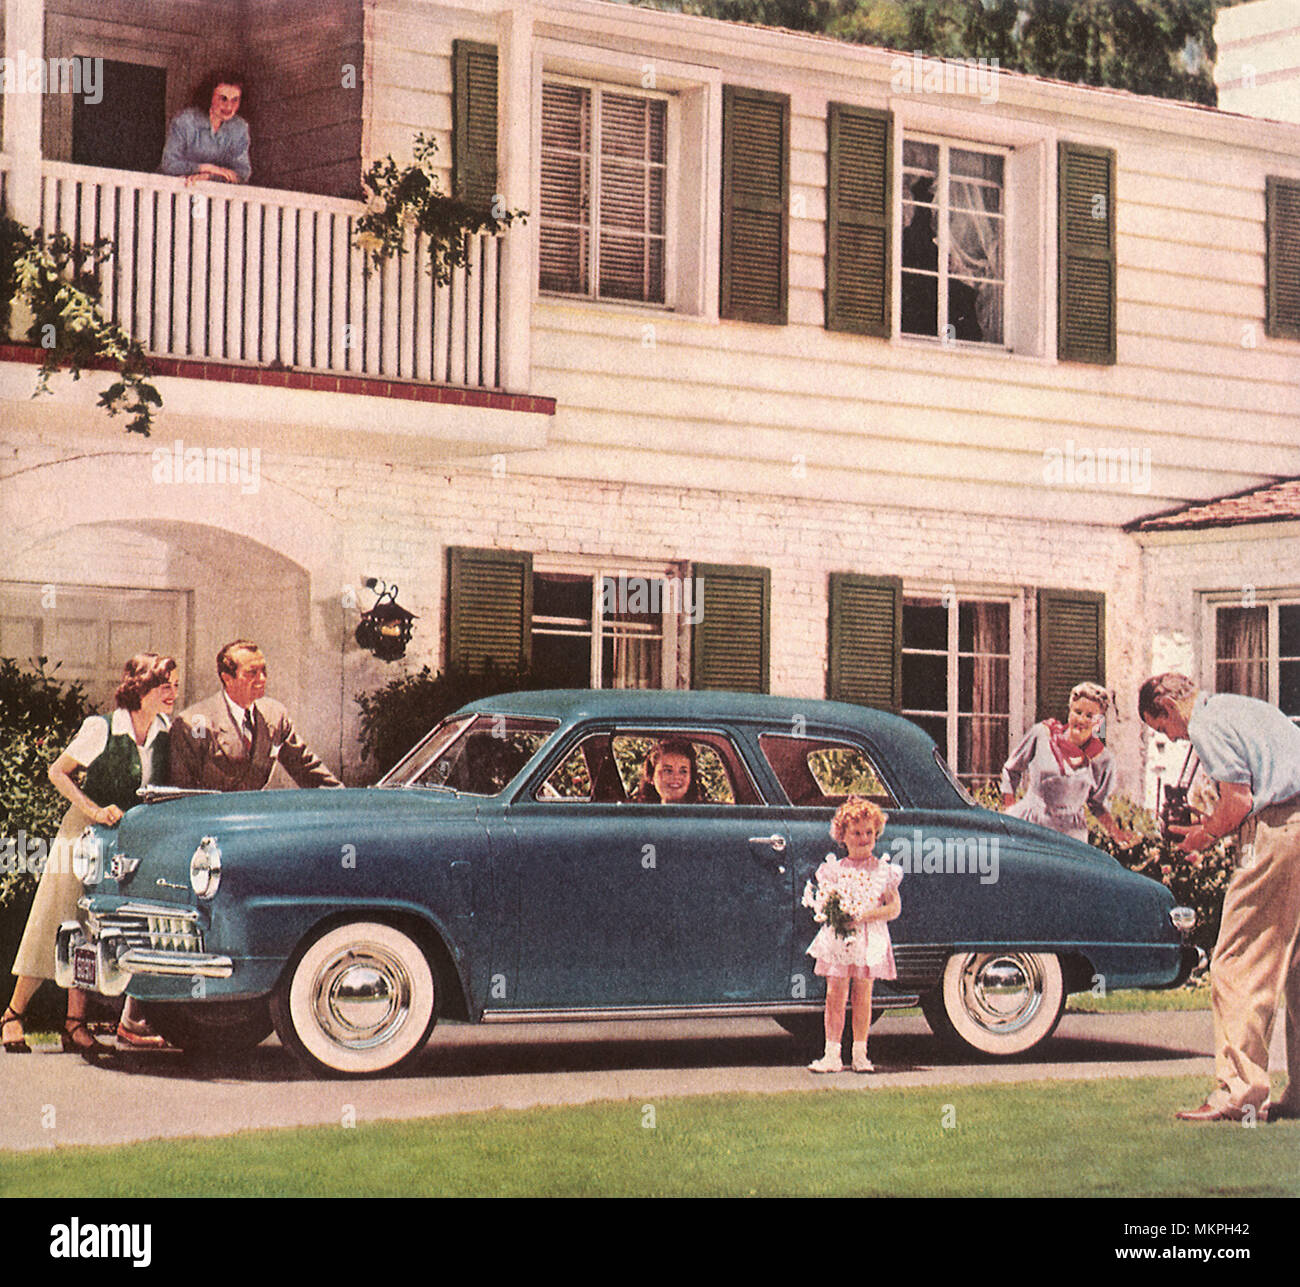 1947 Studebaker Stockfoto